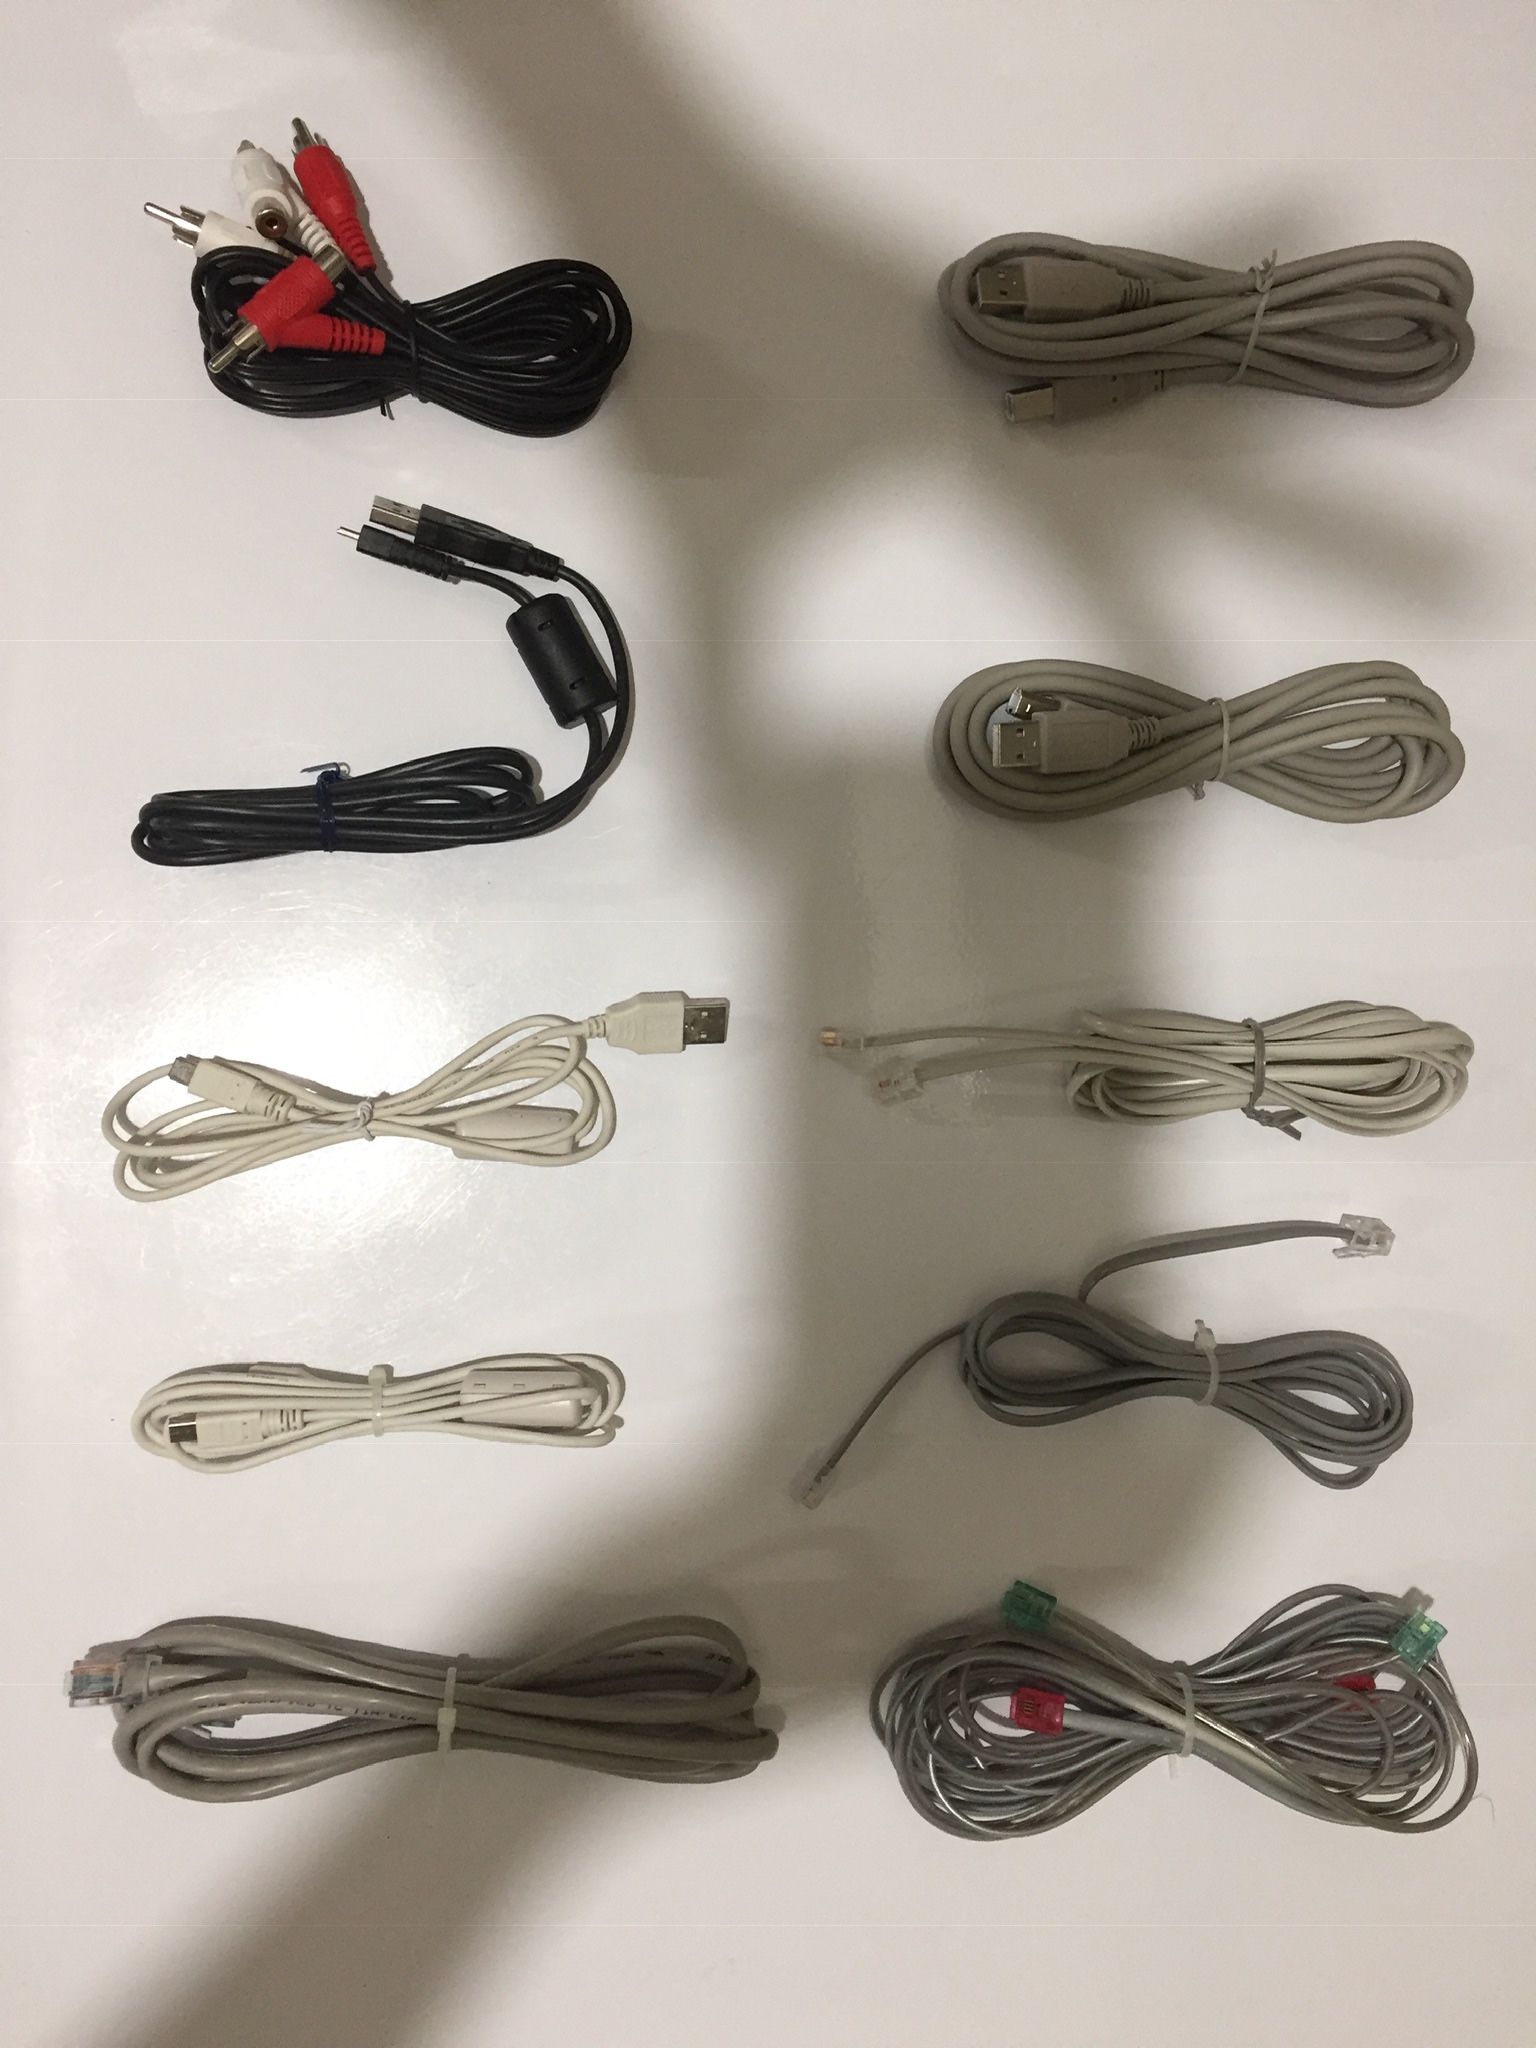 USB Cables- Printer, Camera, Ethernet